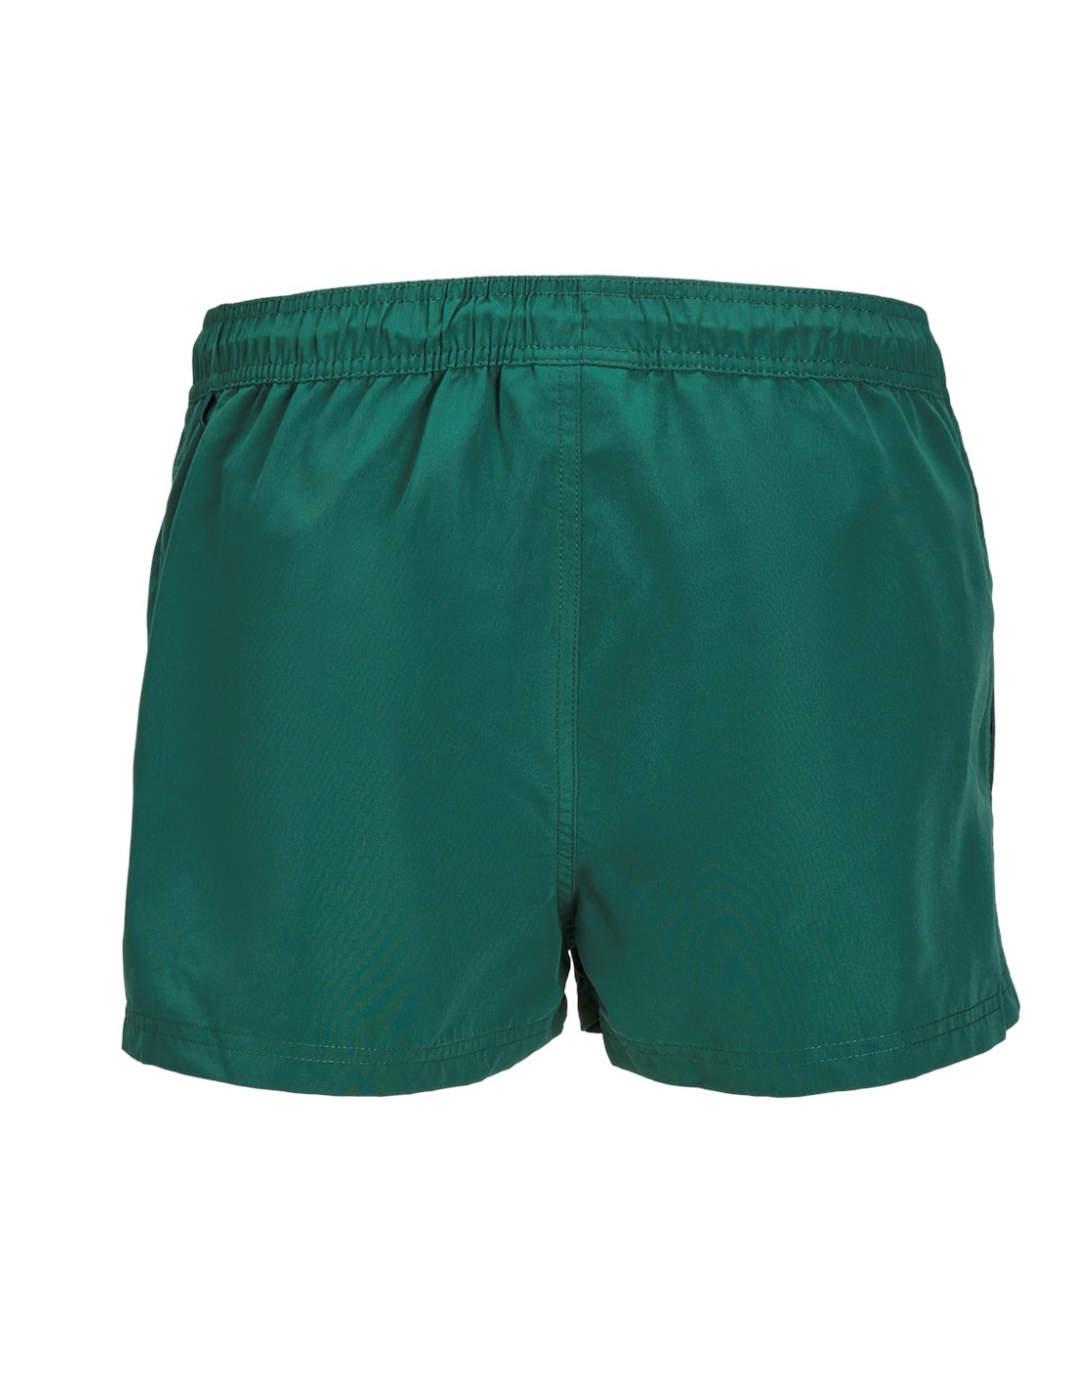 Bañador Jack&Jones Bora Bora verde corto de hombre